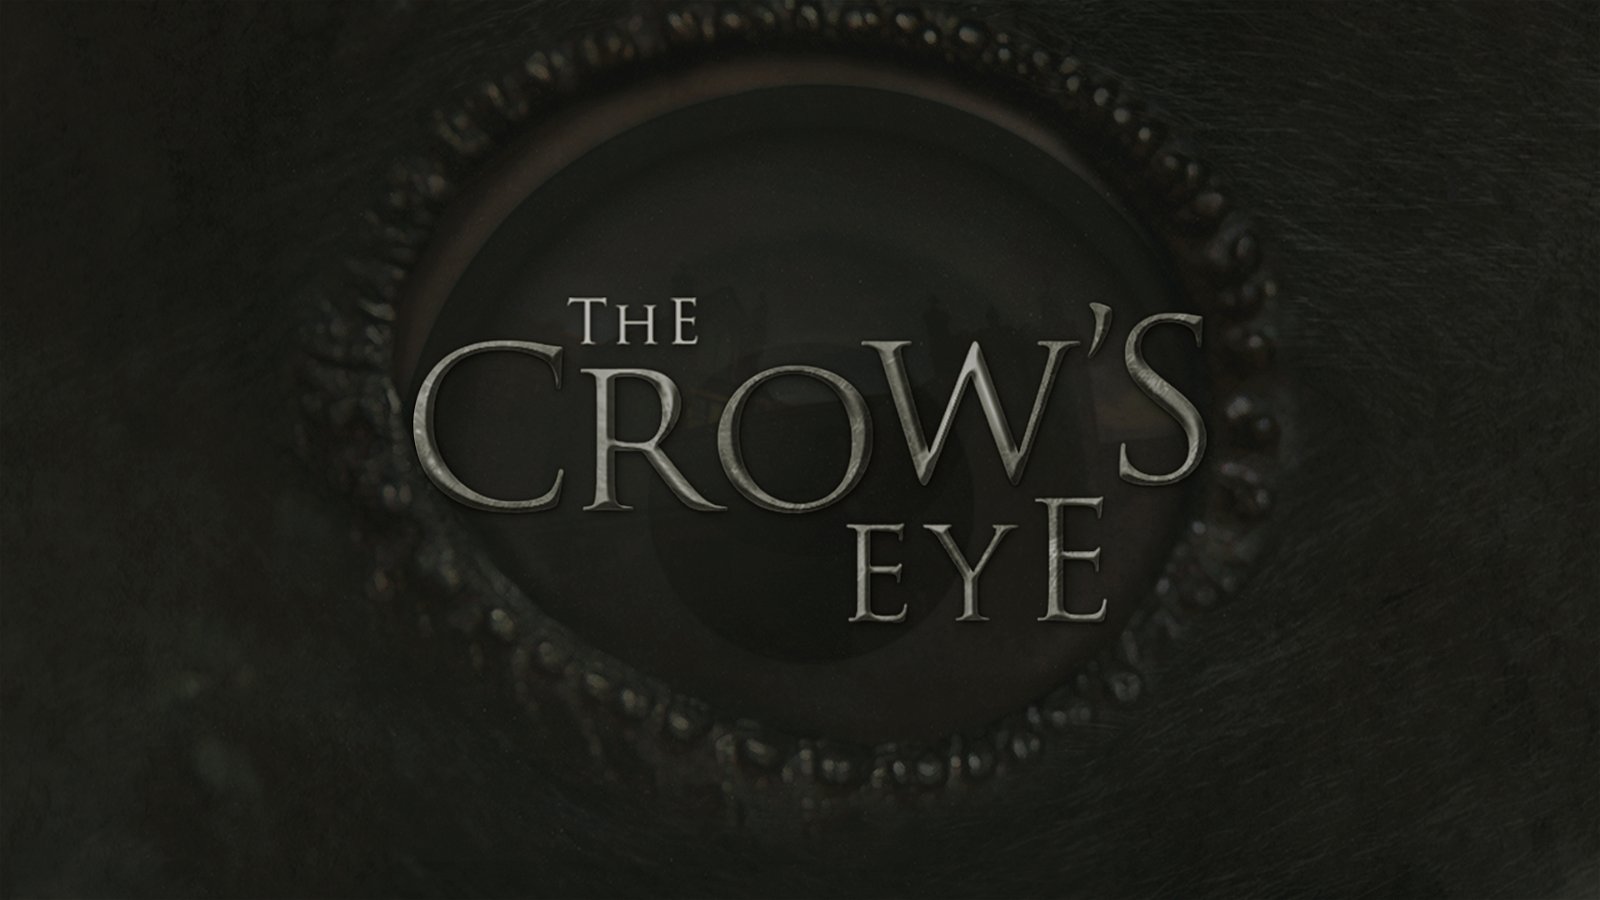 Image of The Crow's Eye